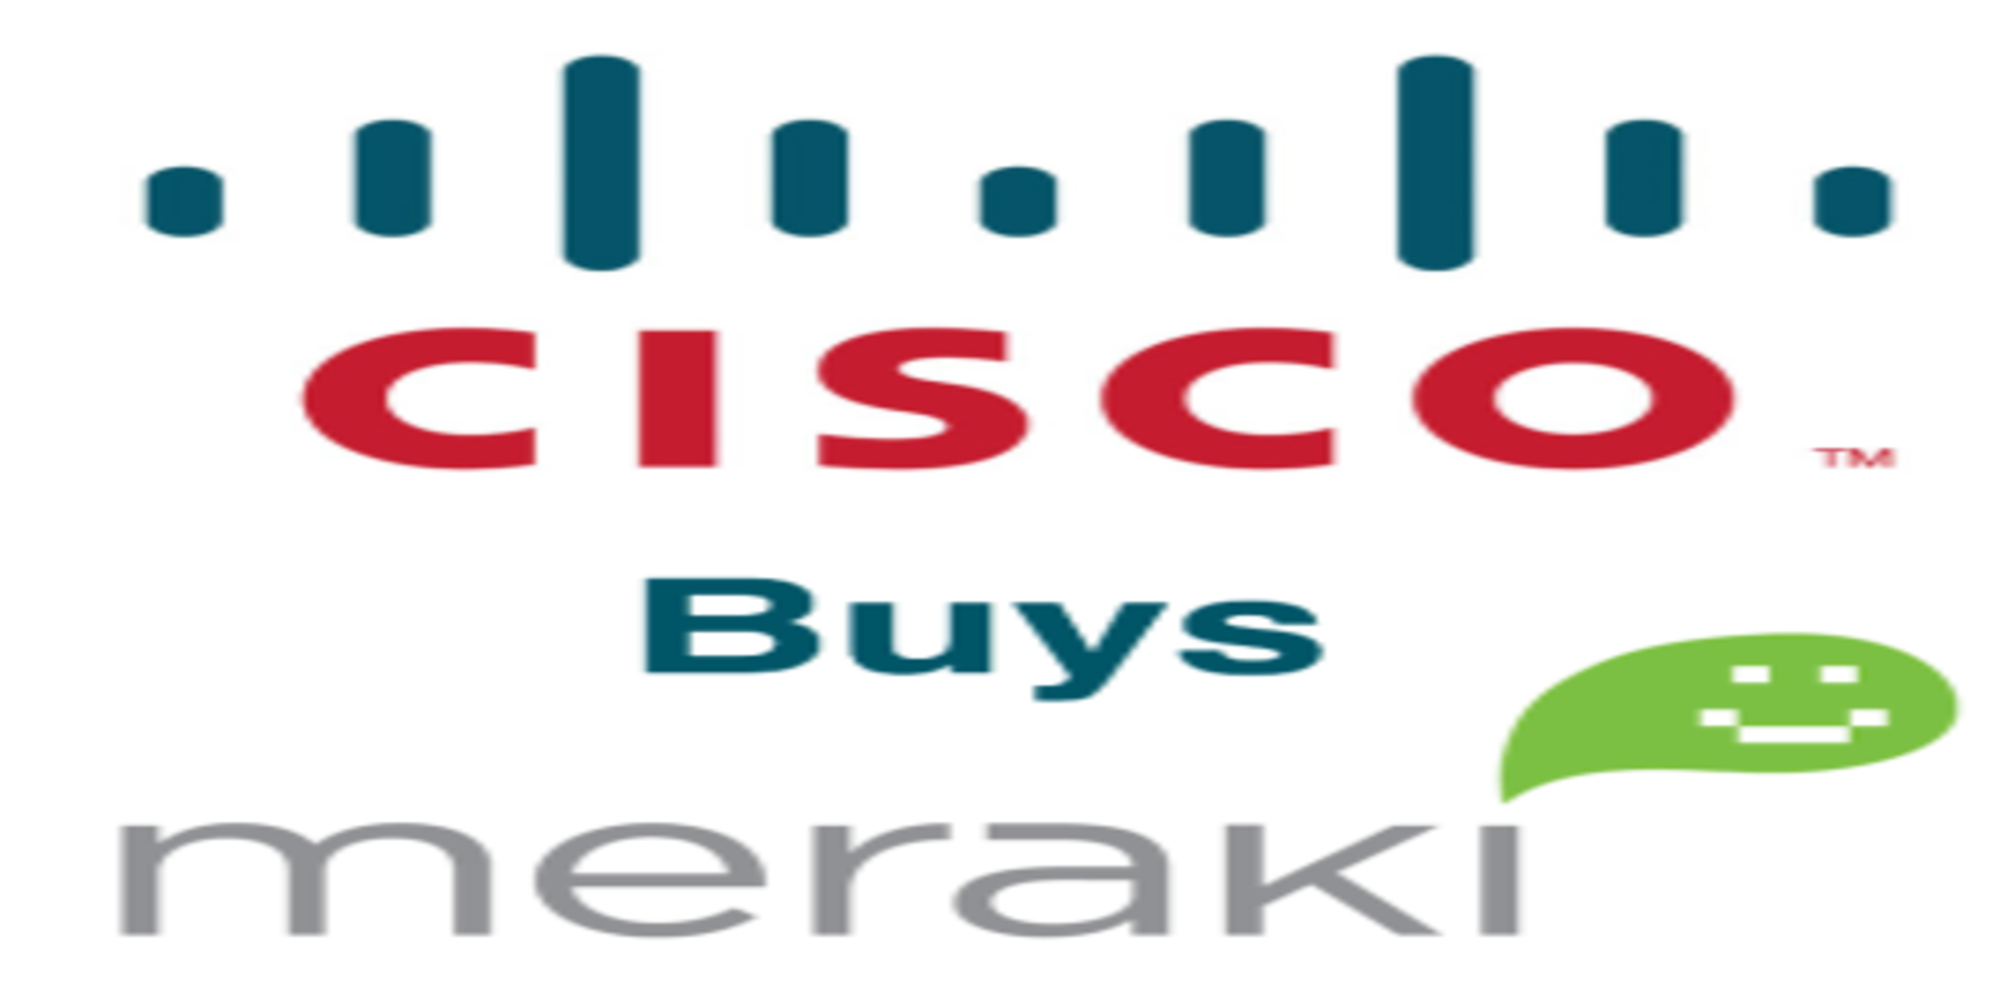 Cisco buys Meraki